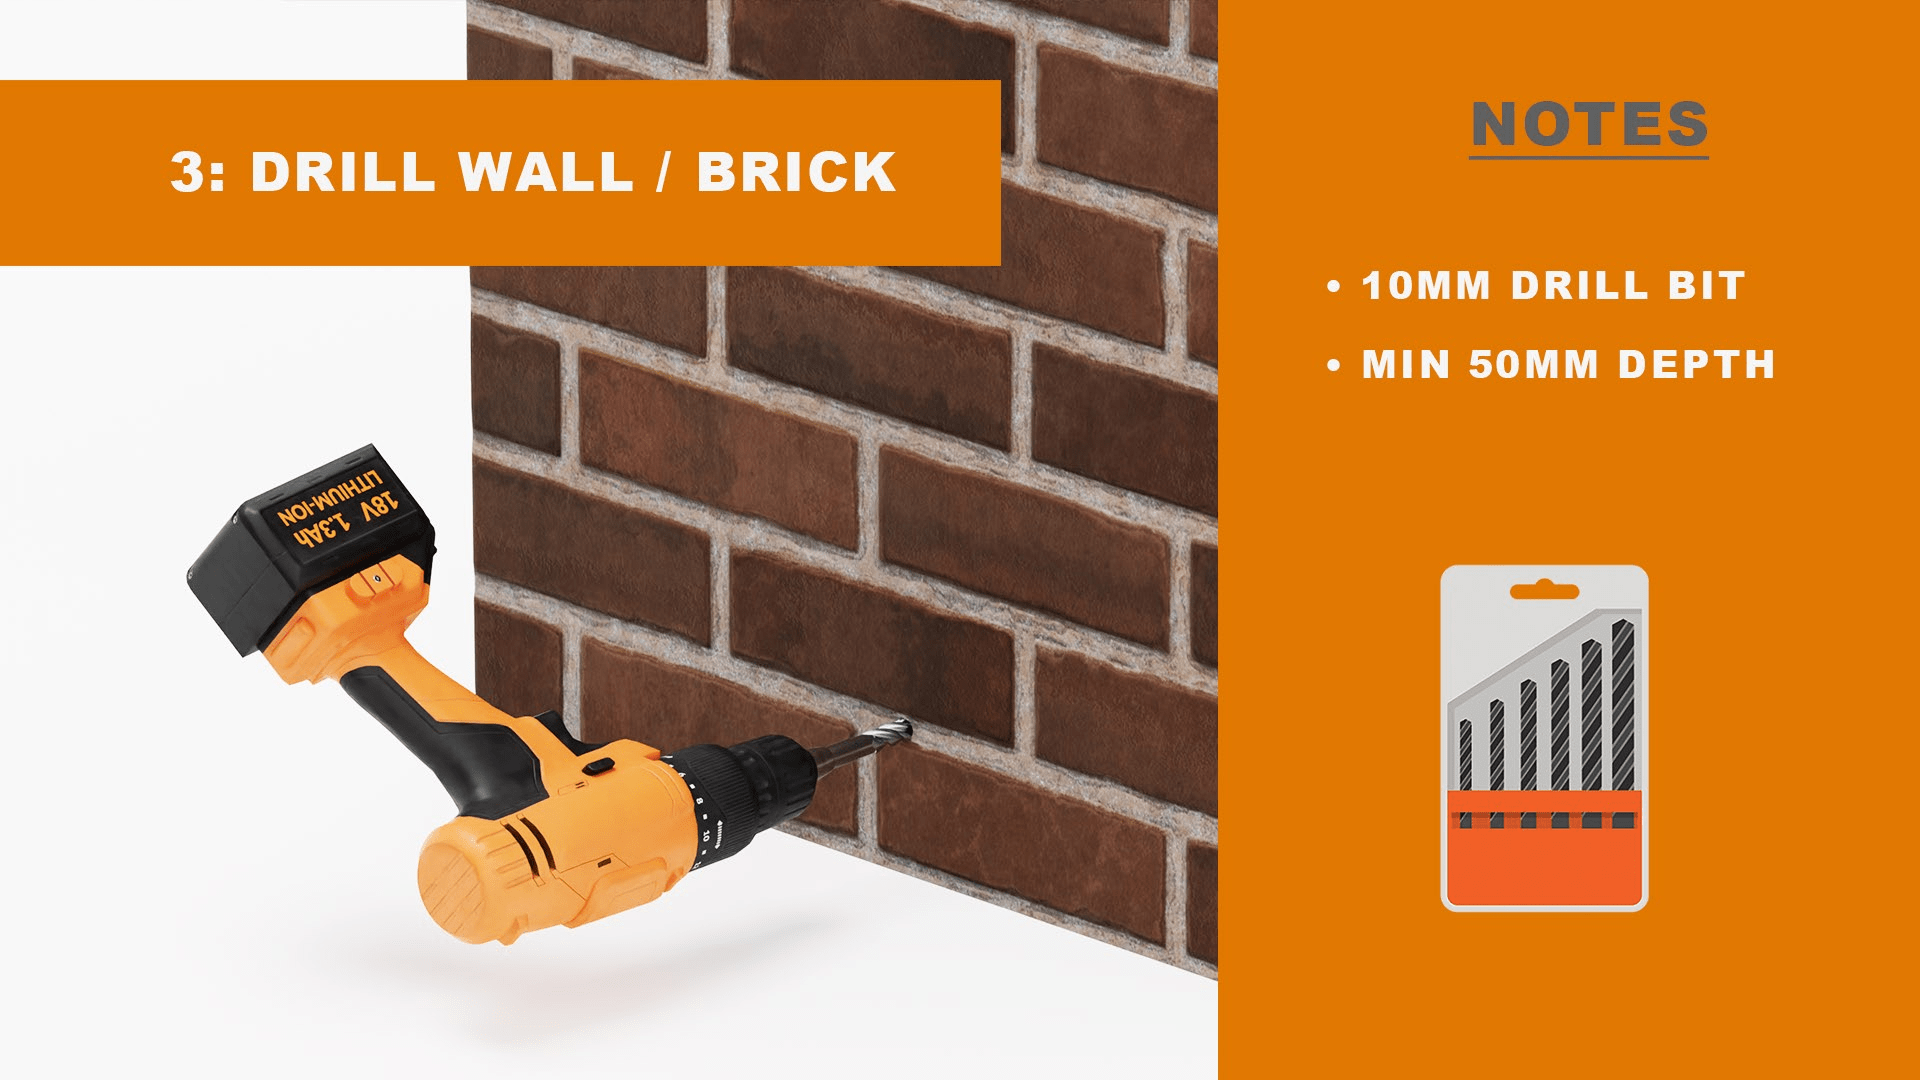 Drill wall / brickwork